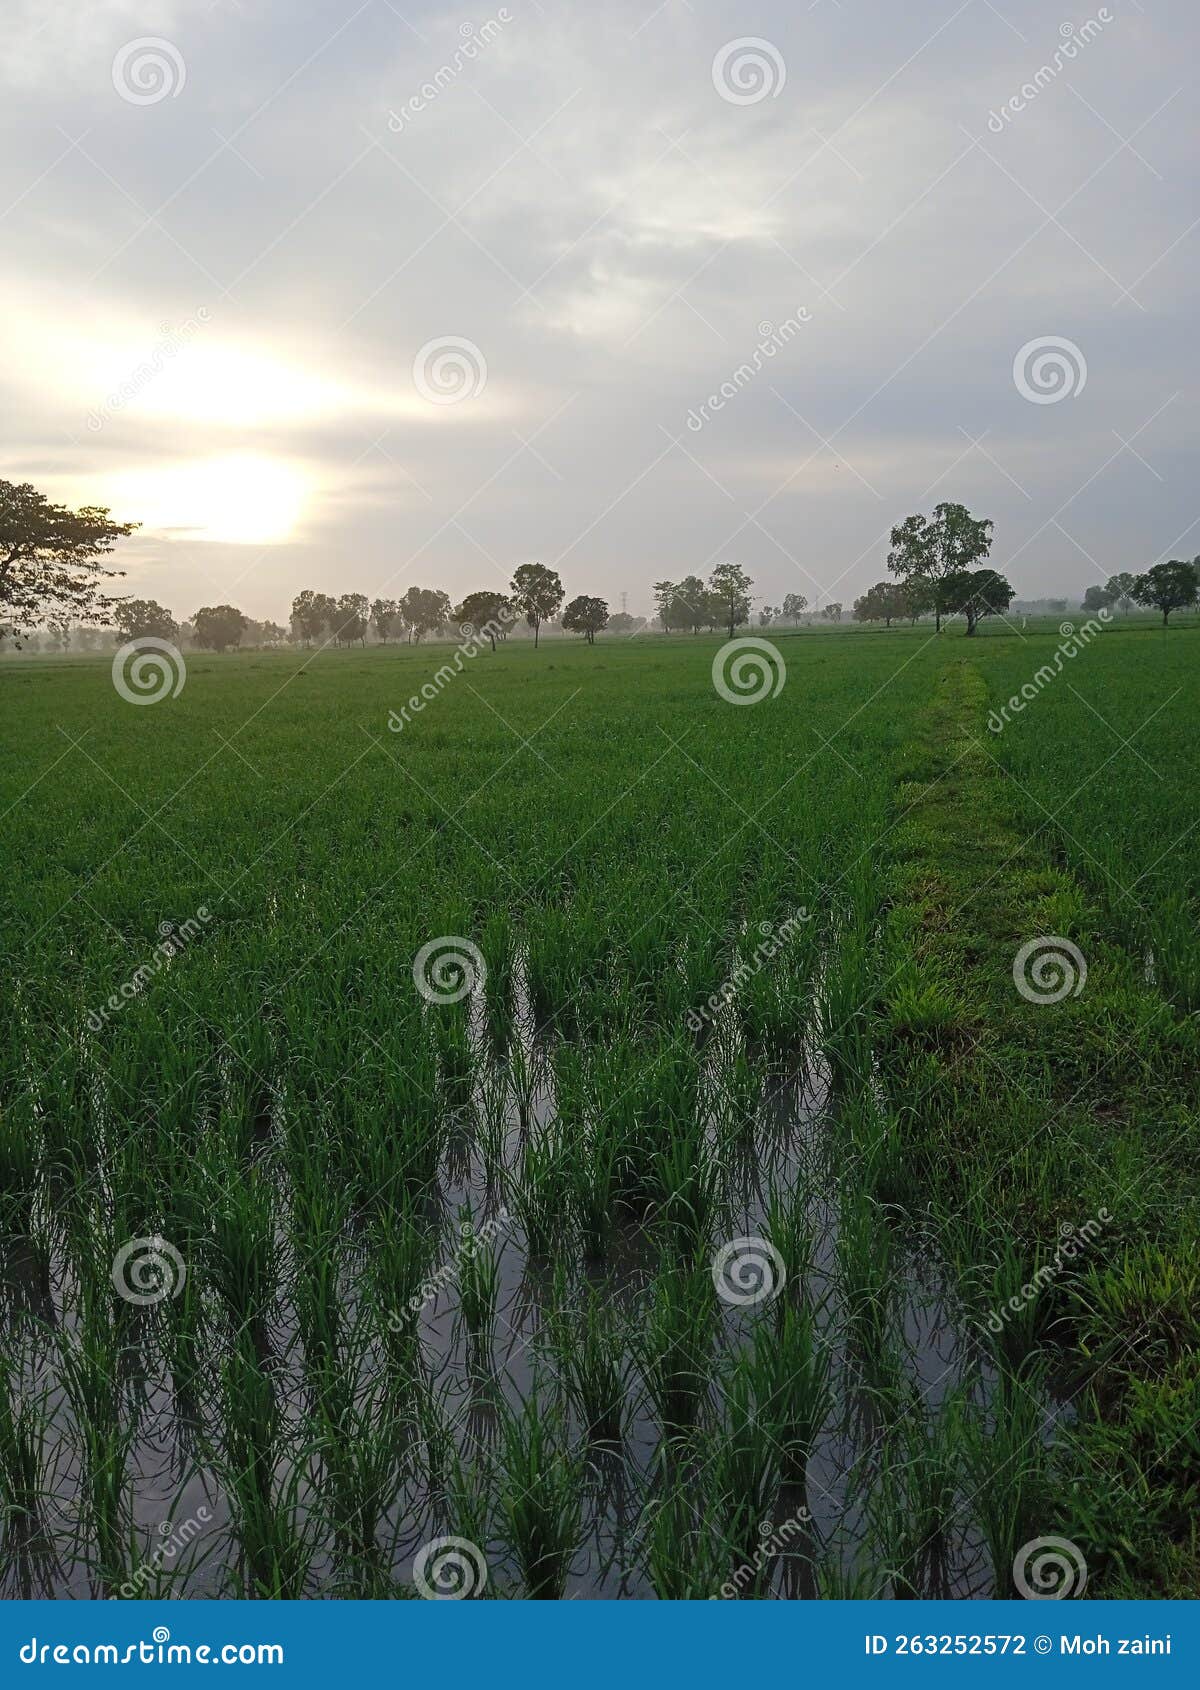 rice fields in madures